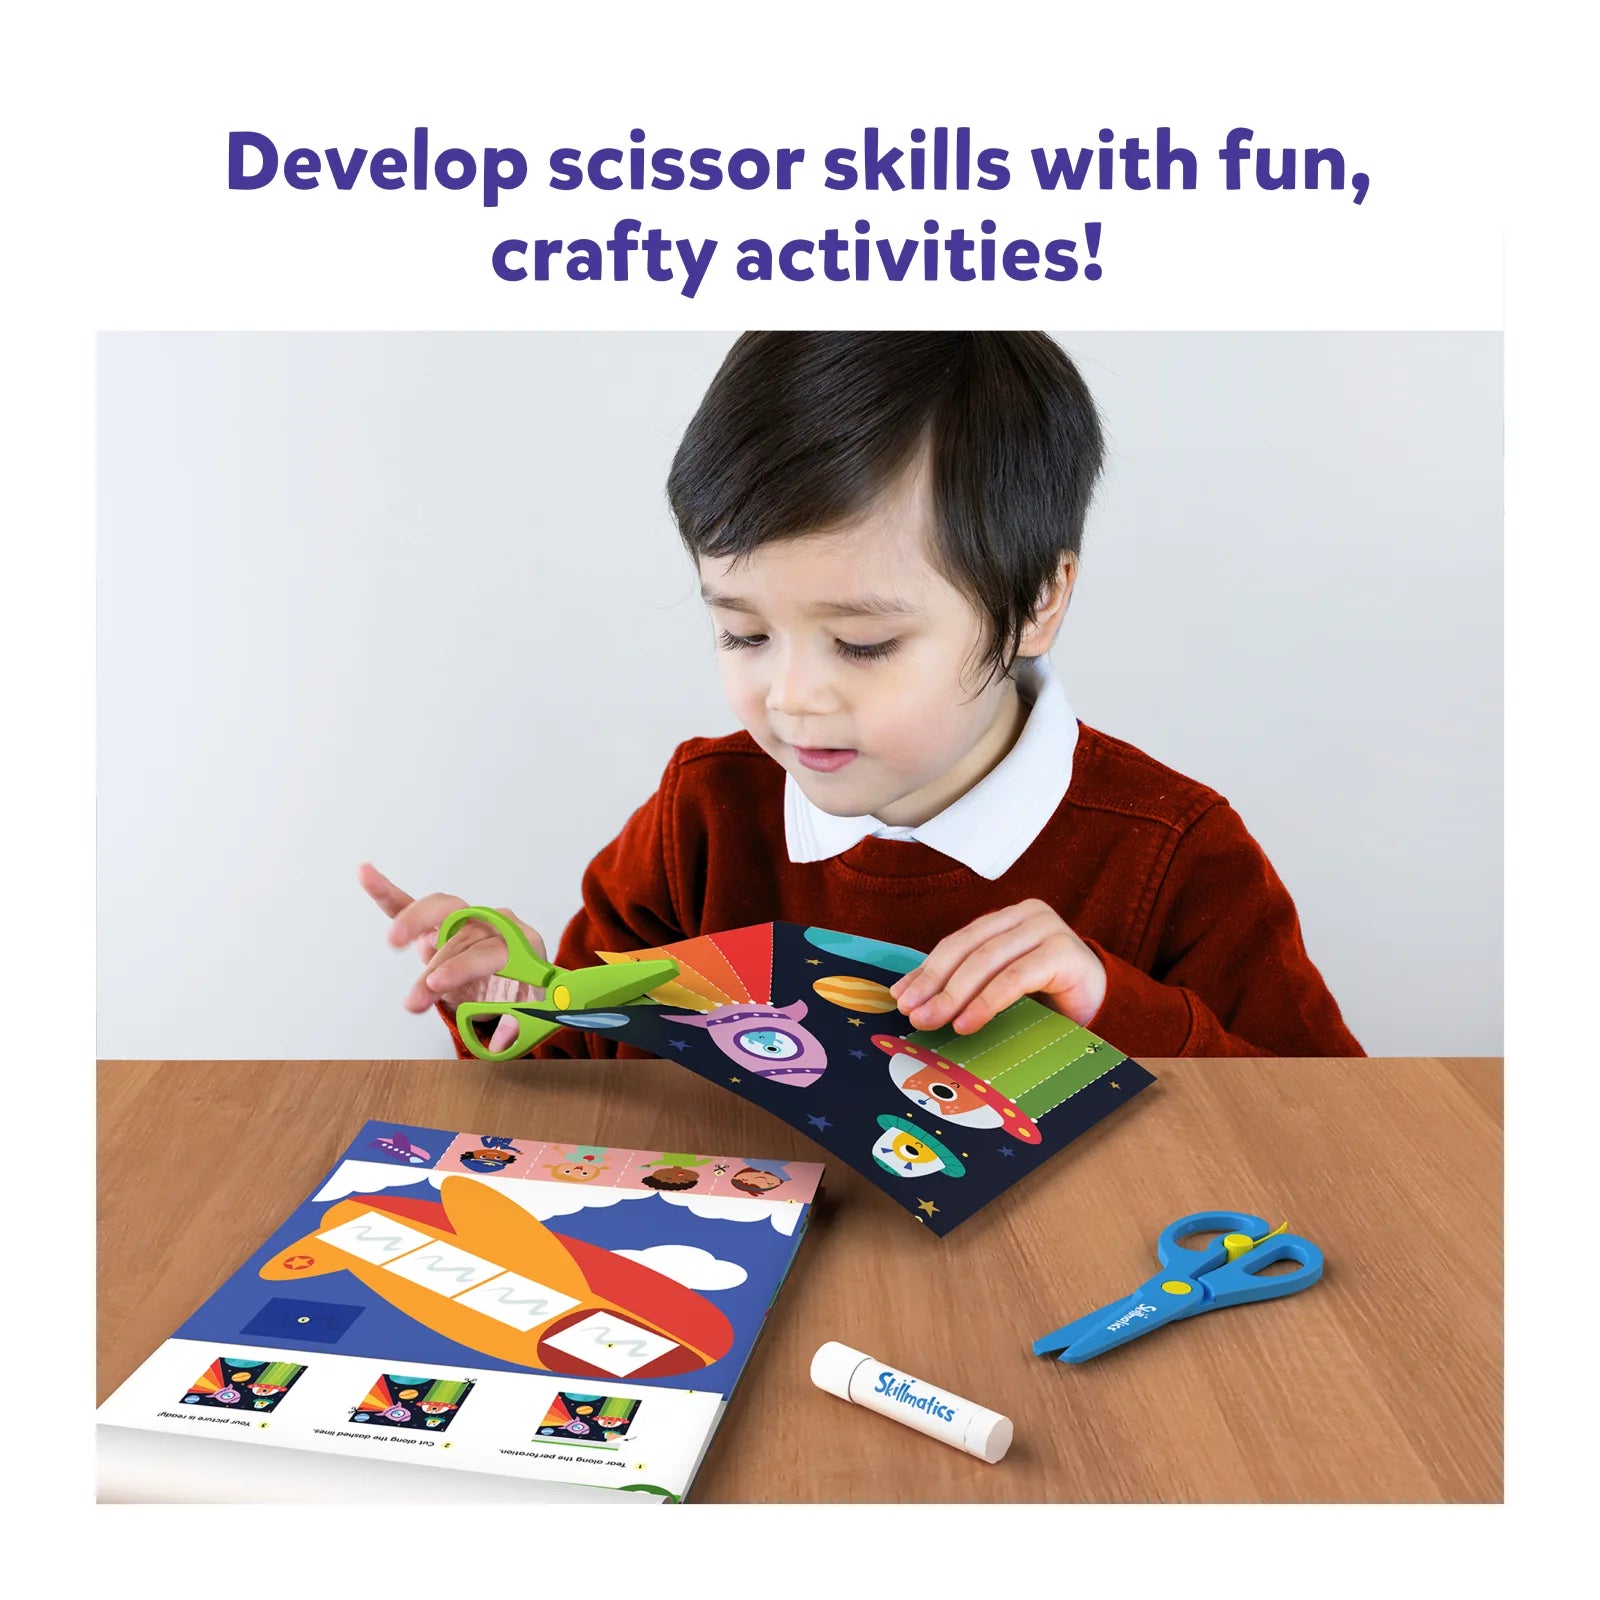 Snip Snip | Art & Craft Activity Kit (ages 3-7)